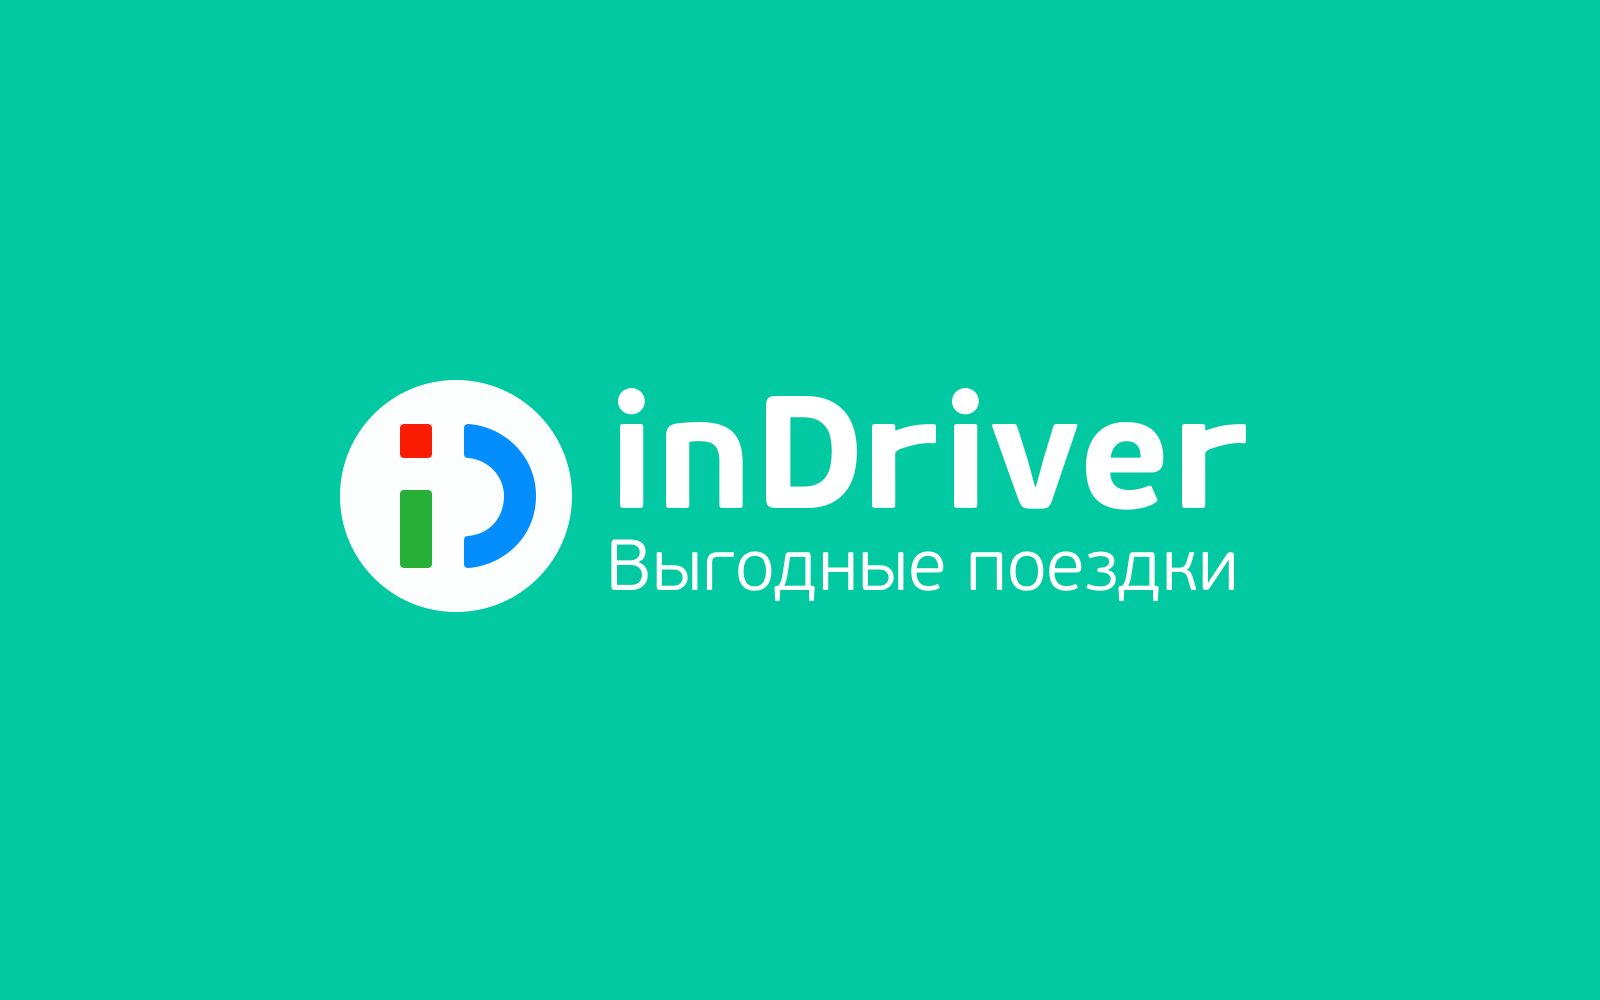 Support indrive com. INDRIVER. INDRIVER значок. Приложение индрайвер. Iтdrive лого.